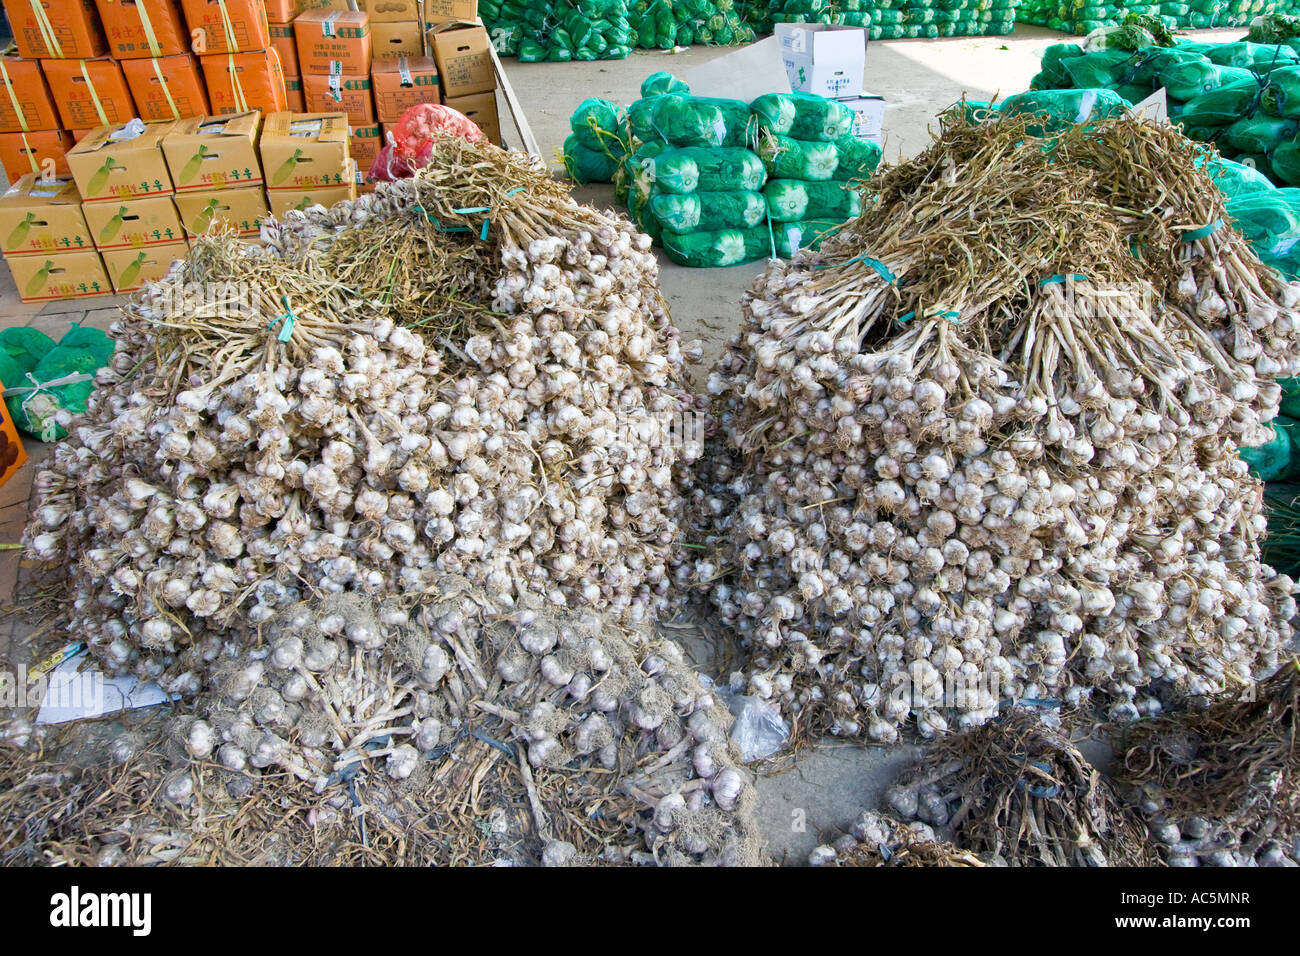 Bundles of Whole Garlic Co op Produce Consolidator Jecheon Chungcheongbuk Do Province South Korea Stock Photo